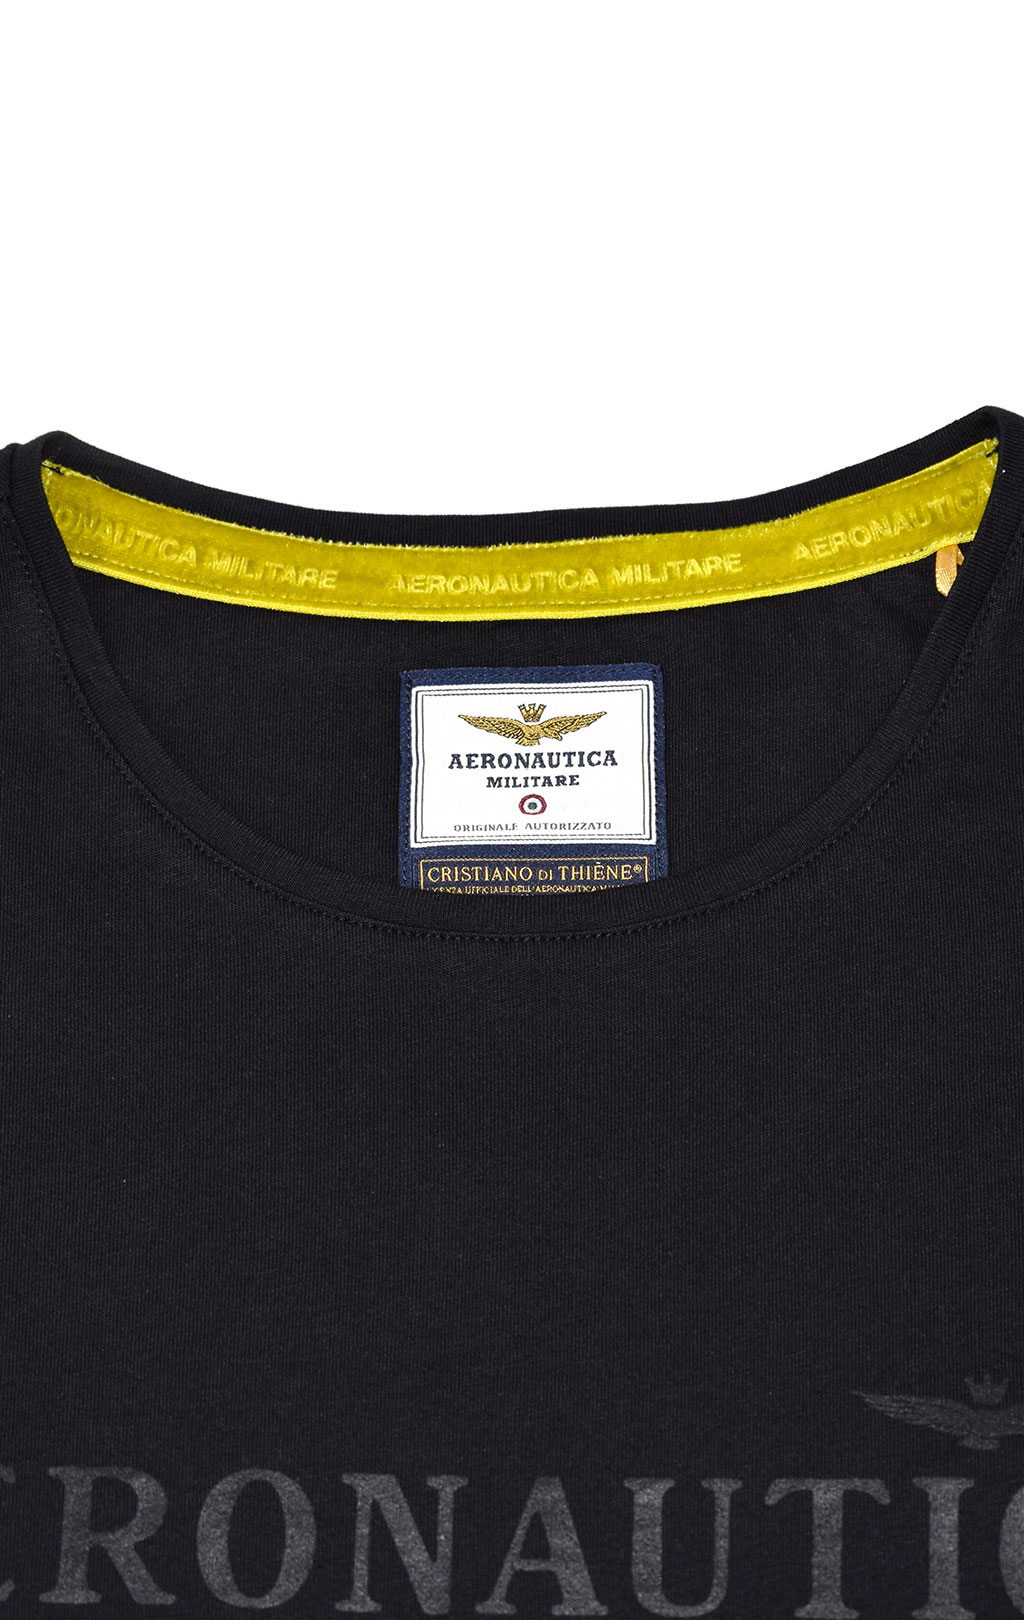 Женская футболка AERONAUTICA MILITARE FW 21/22/TR nero (TS 1914) 